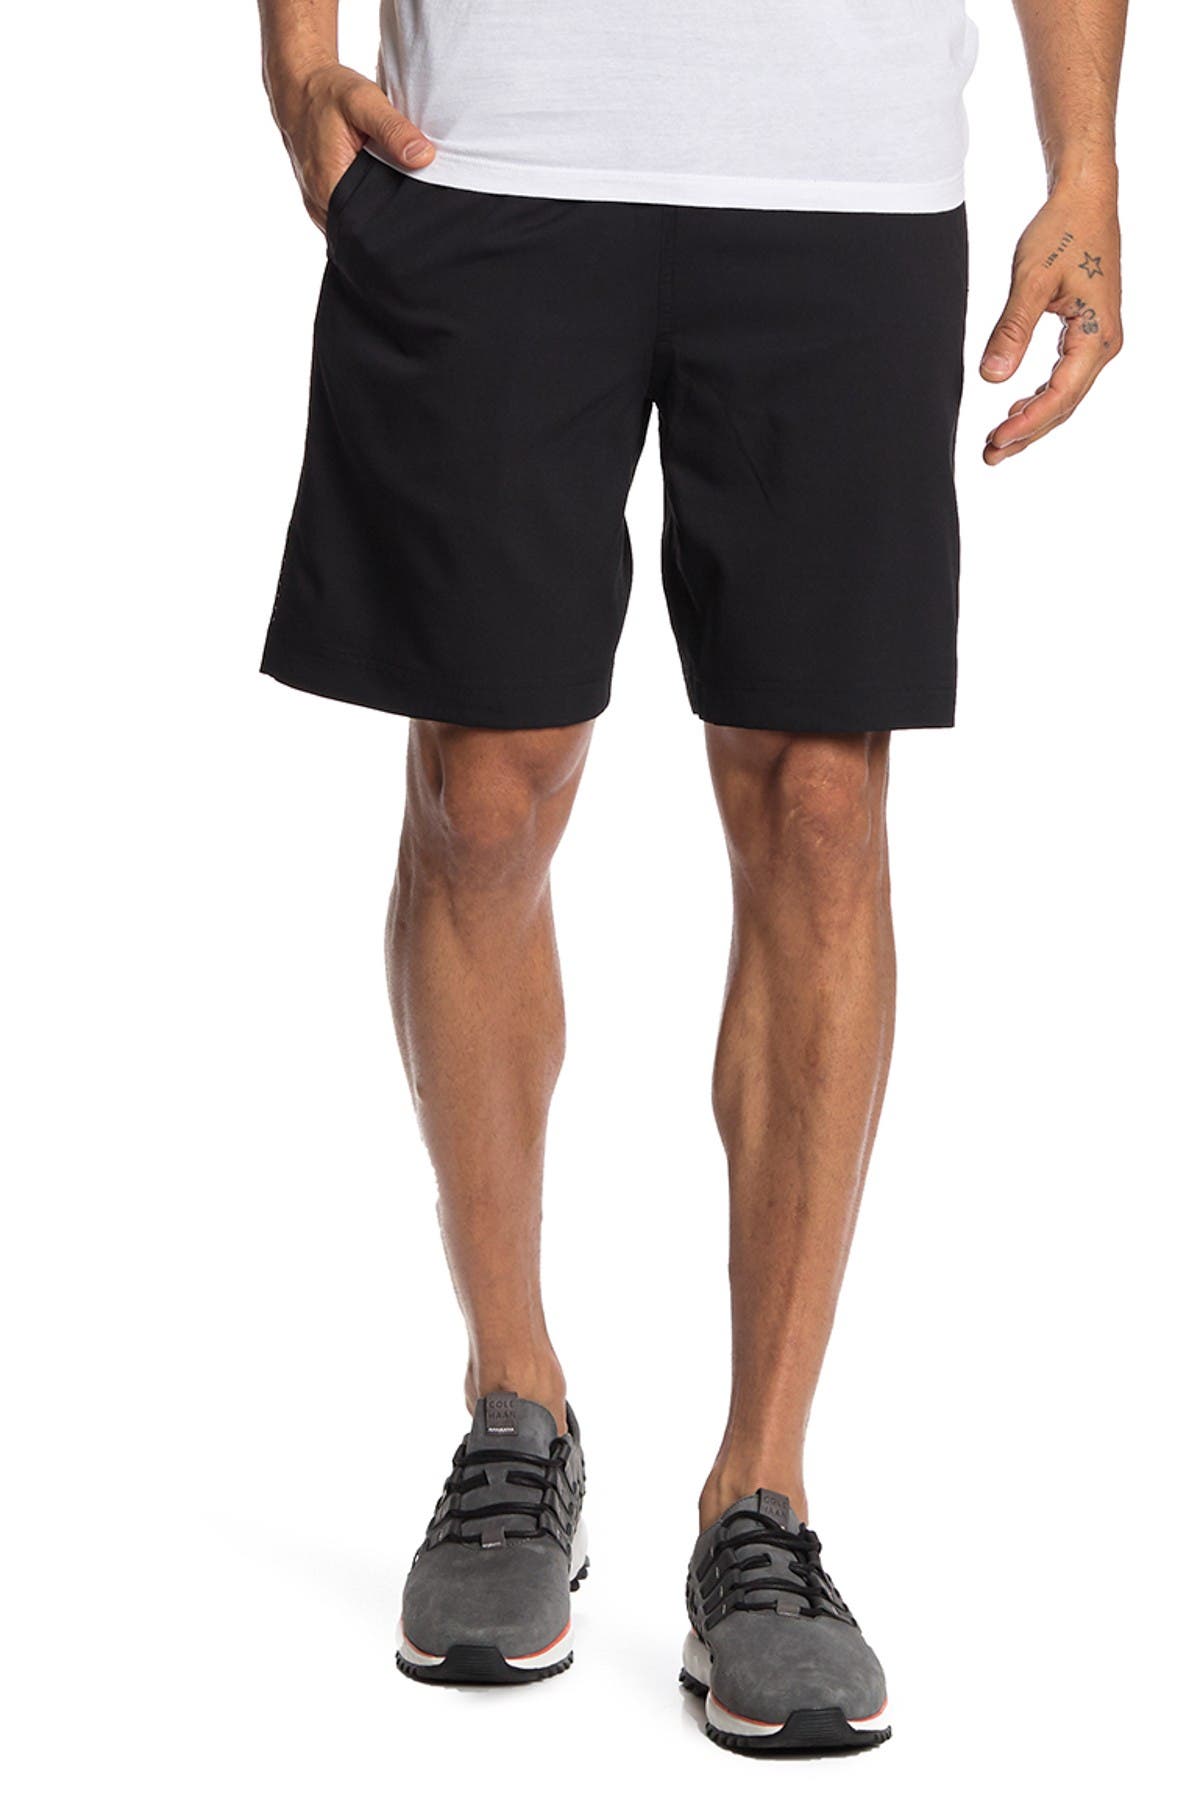 saxx kinetic 2n1 shorts